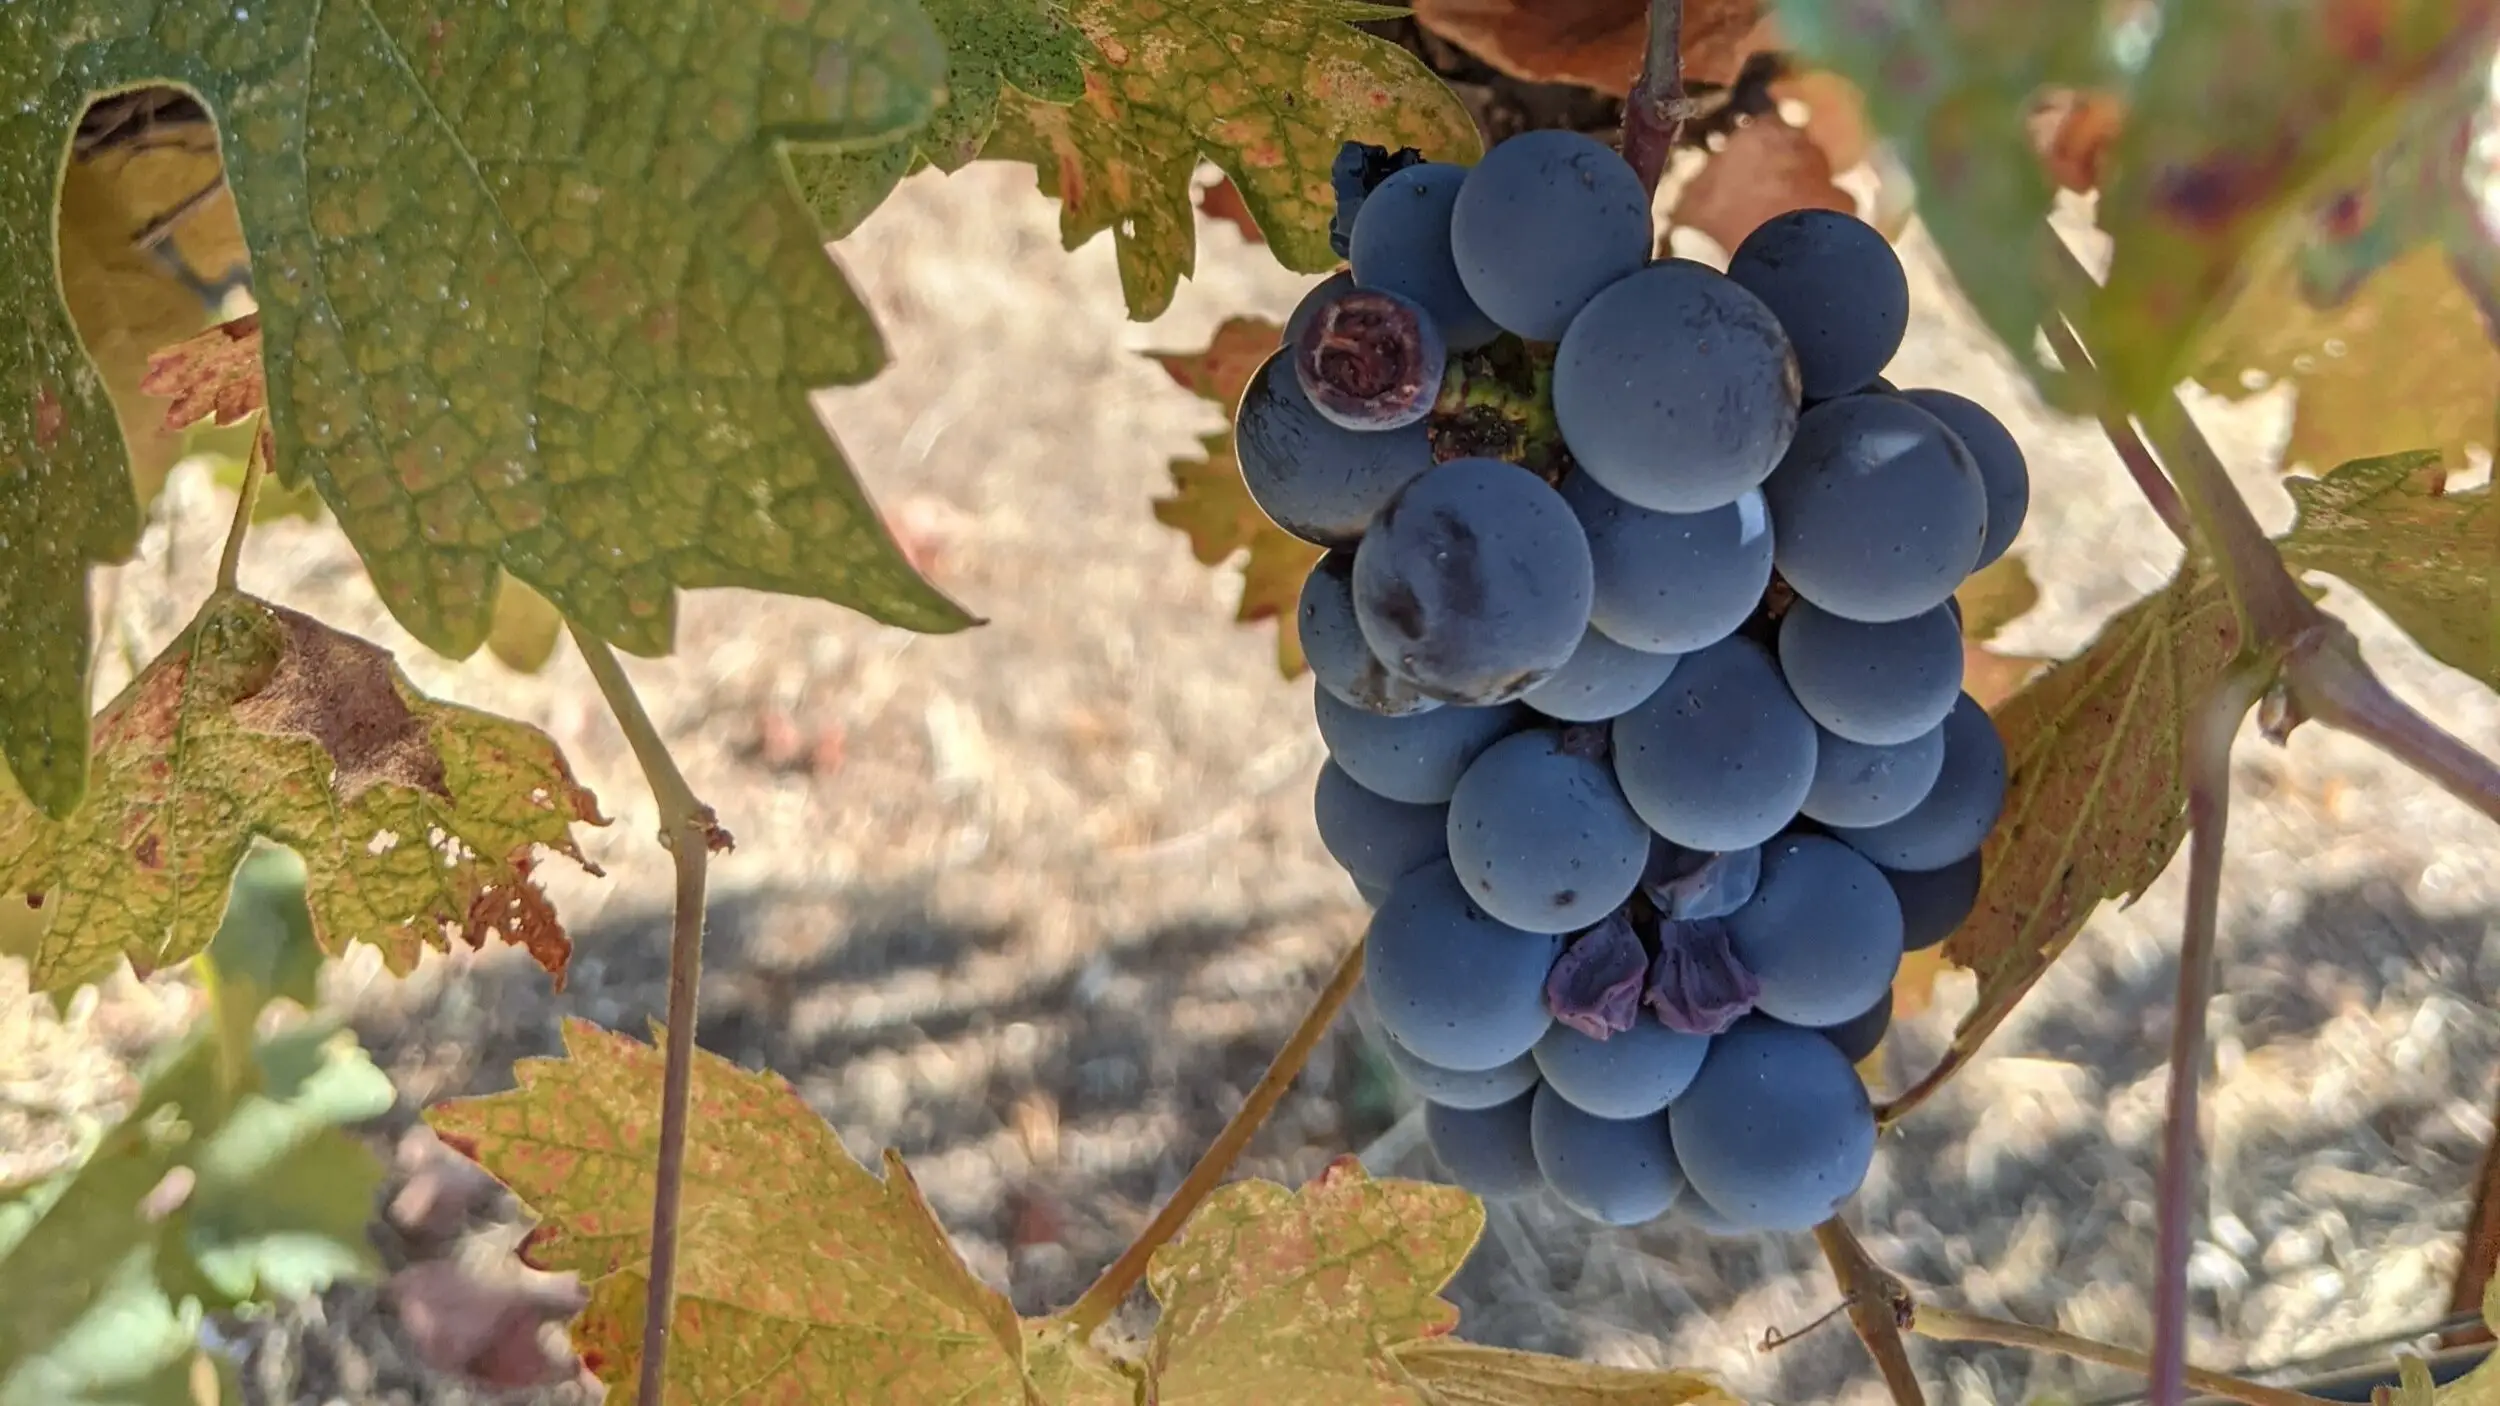 merlot wine grapes